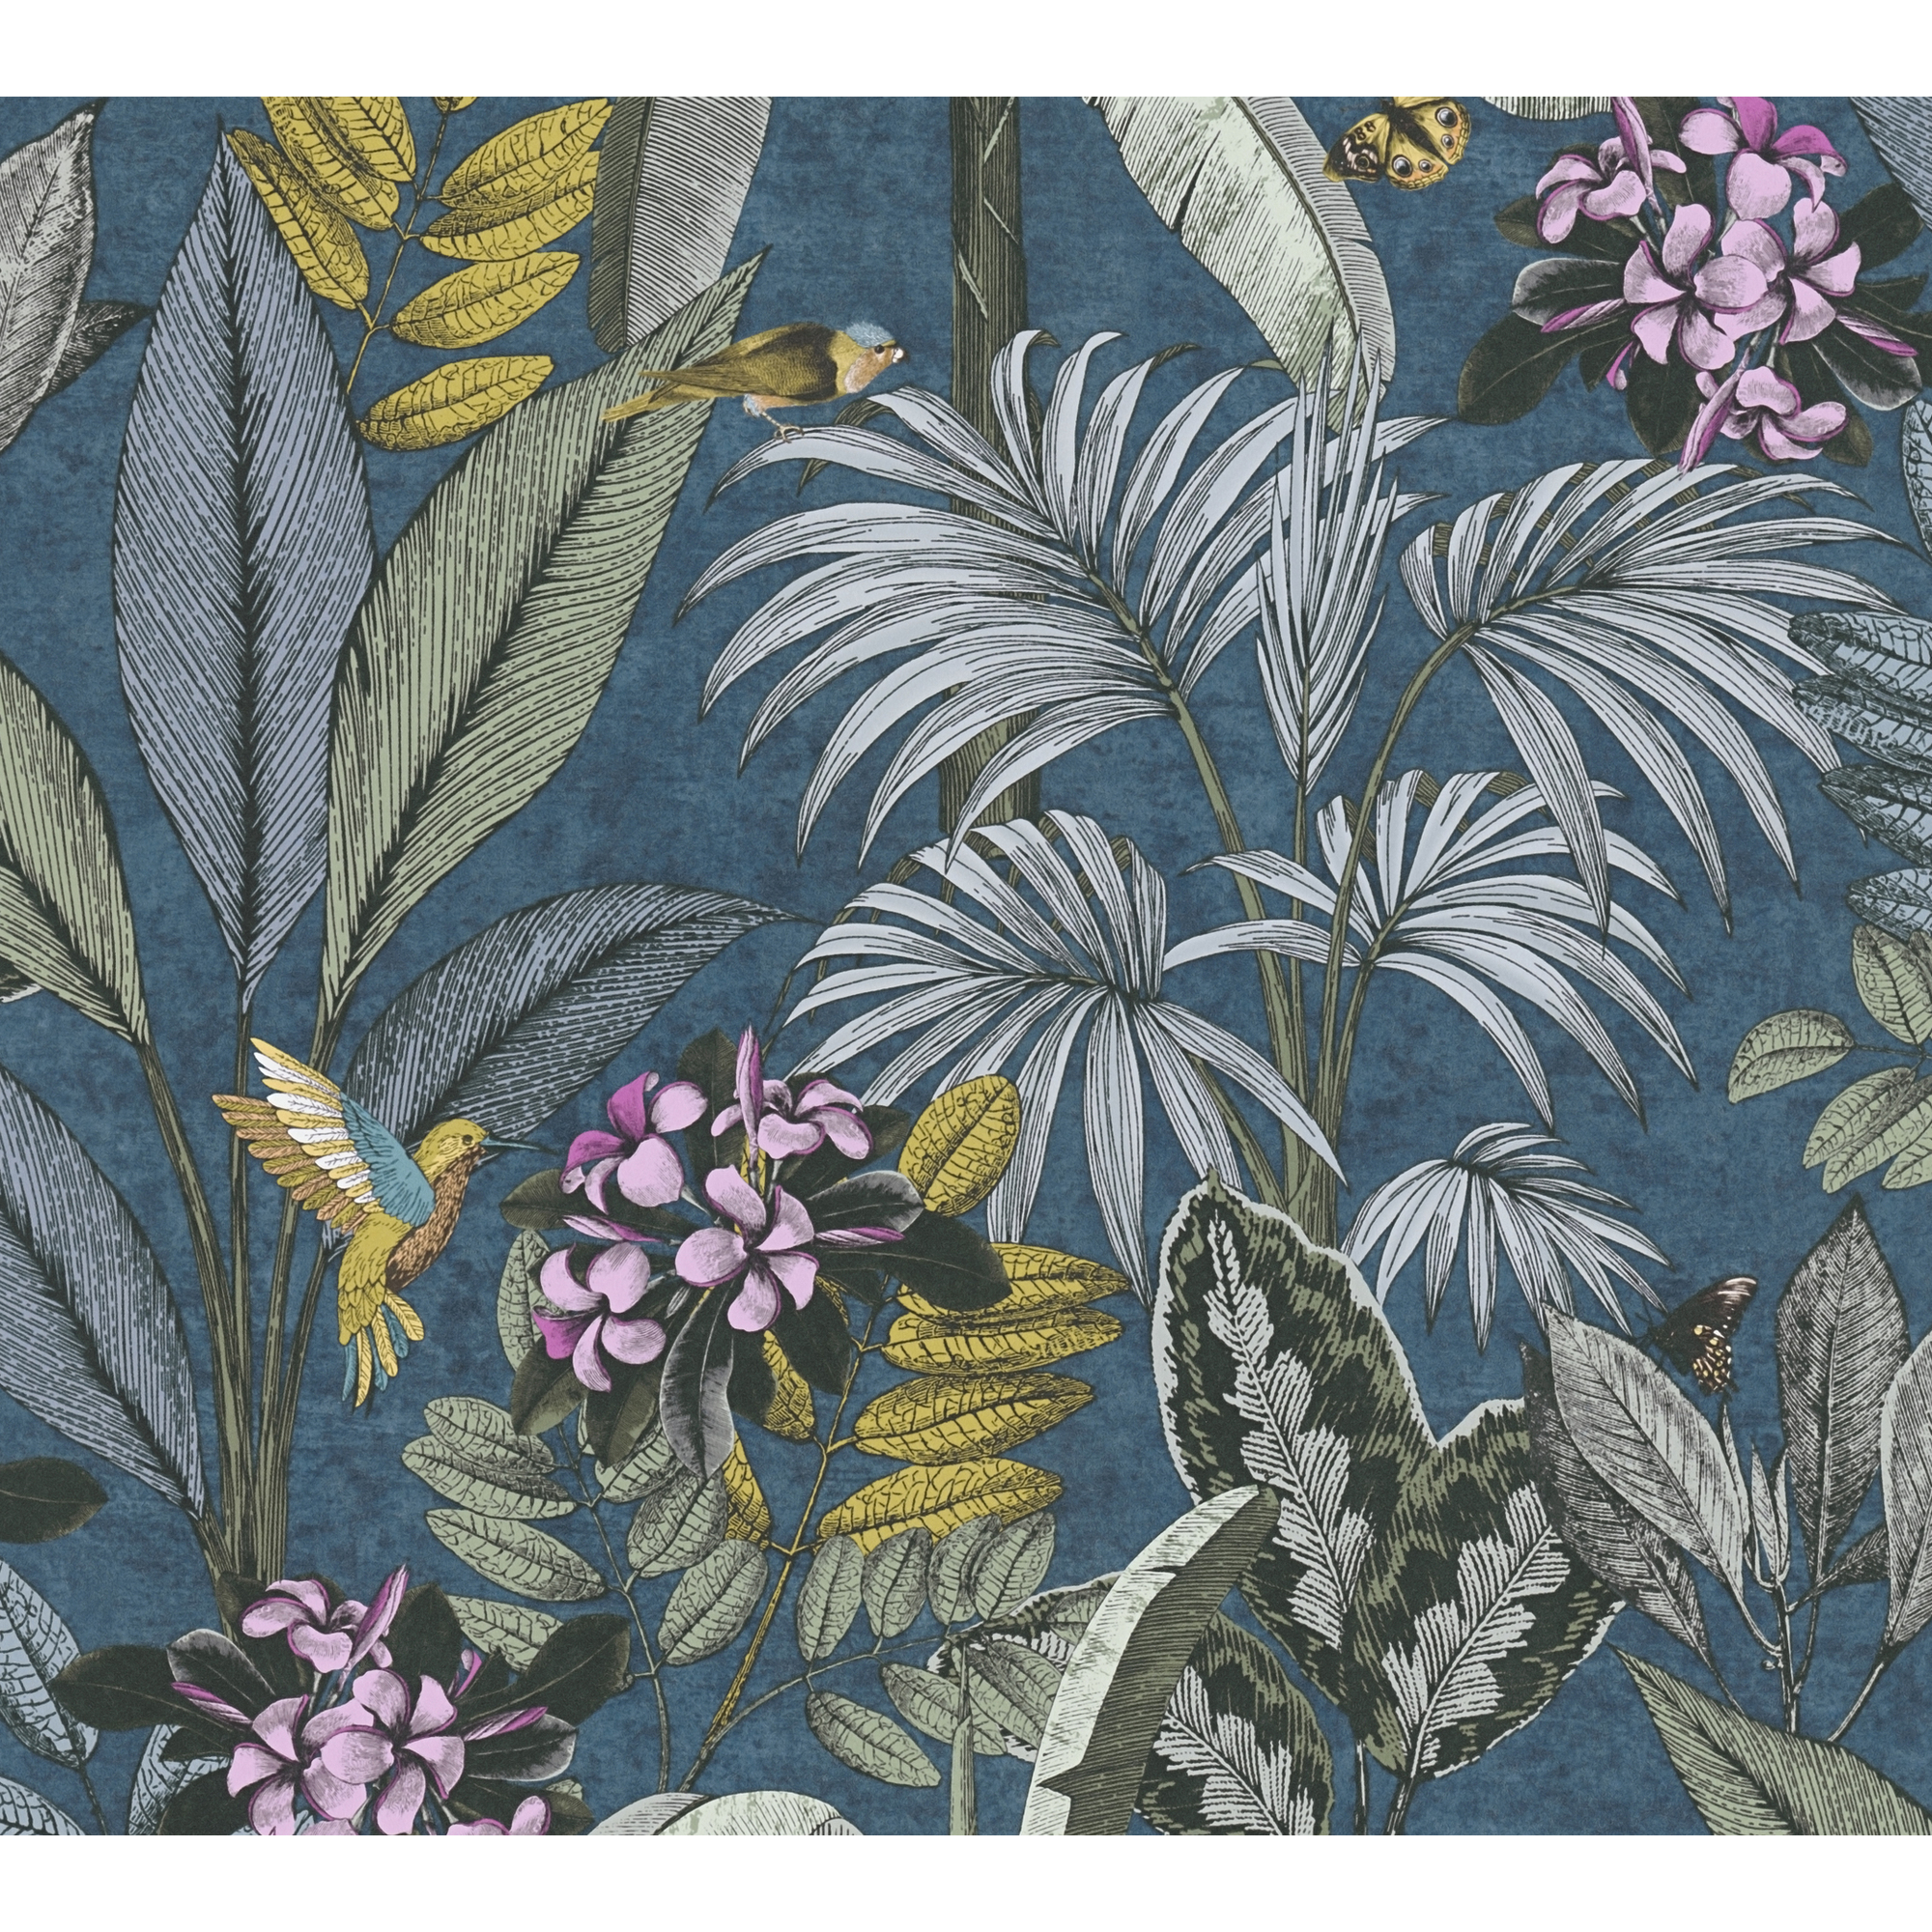 Vliestapete 'Pint Walls' Blätter, Kolibri blau/grün 10,05 x 0,53 m + product picture